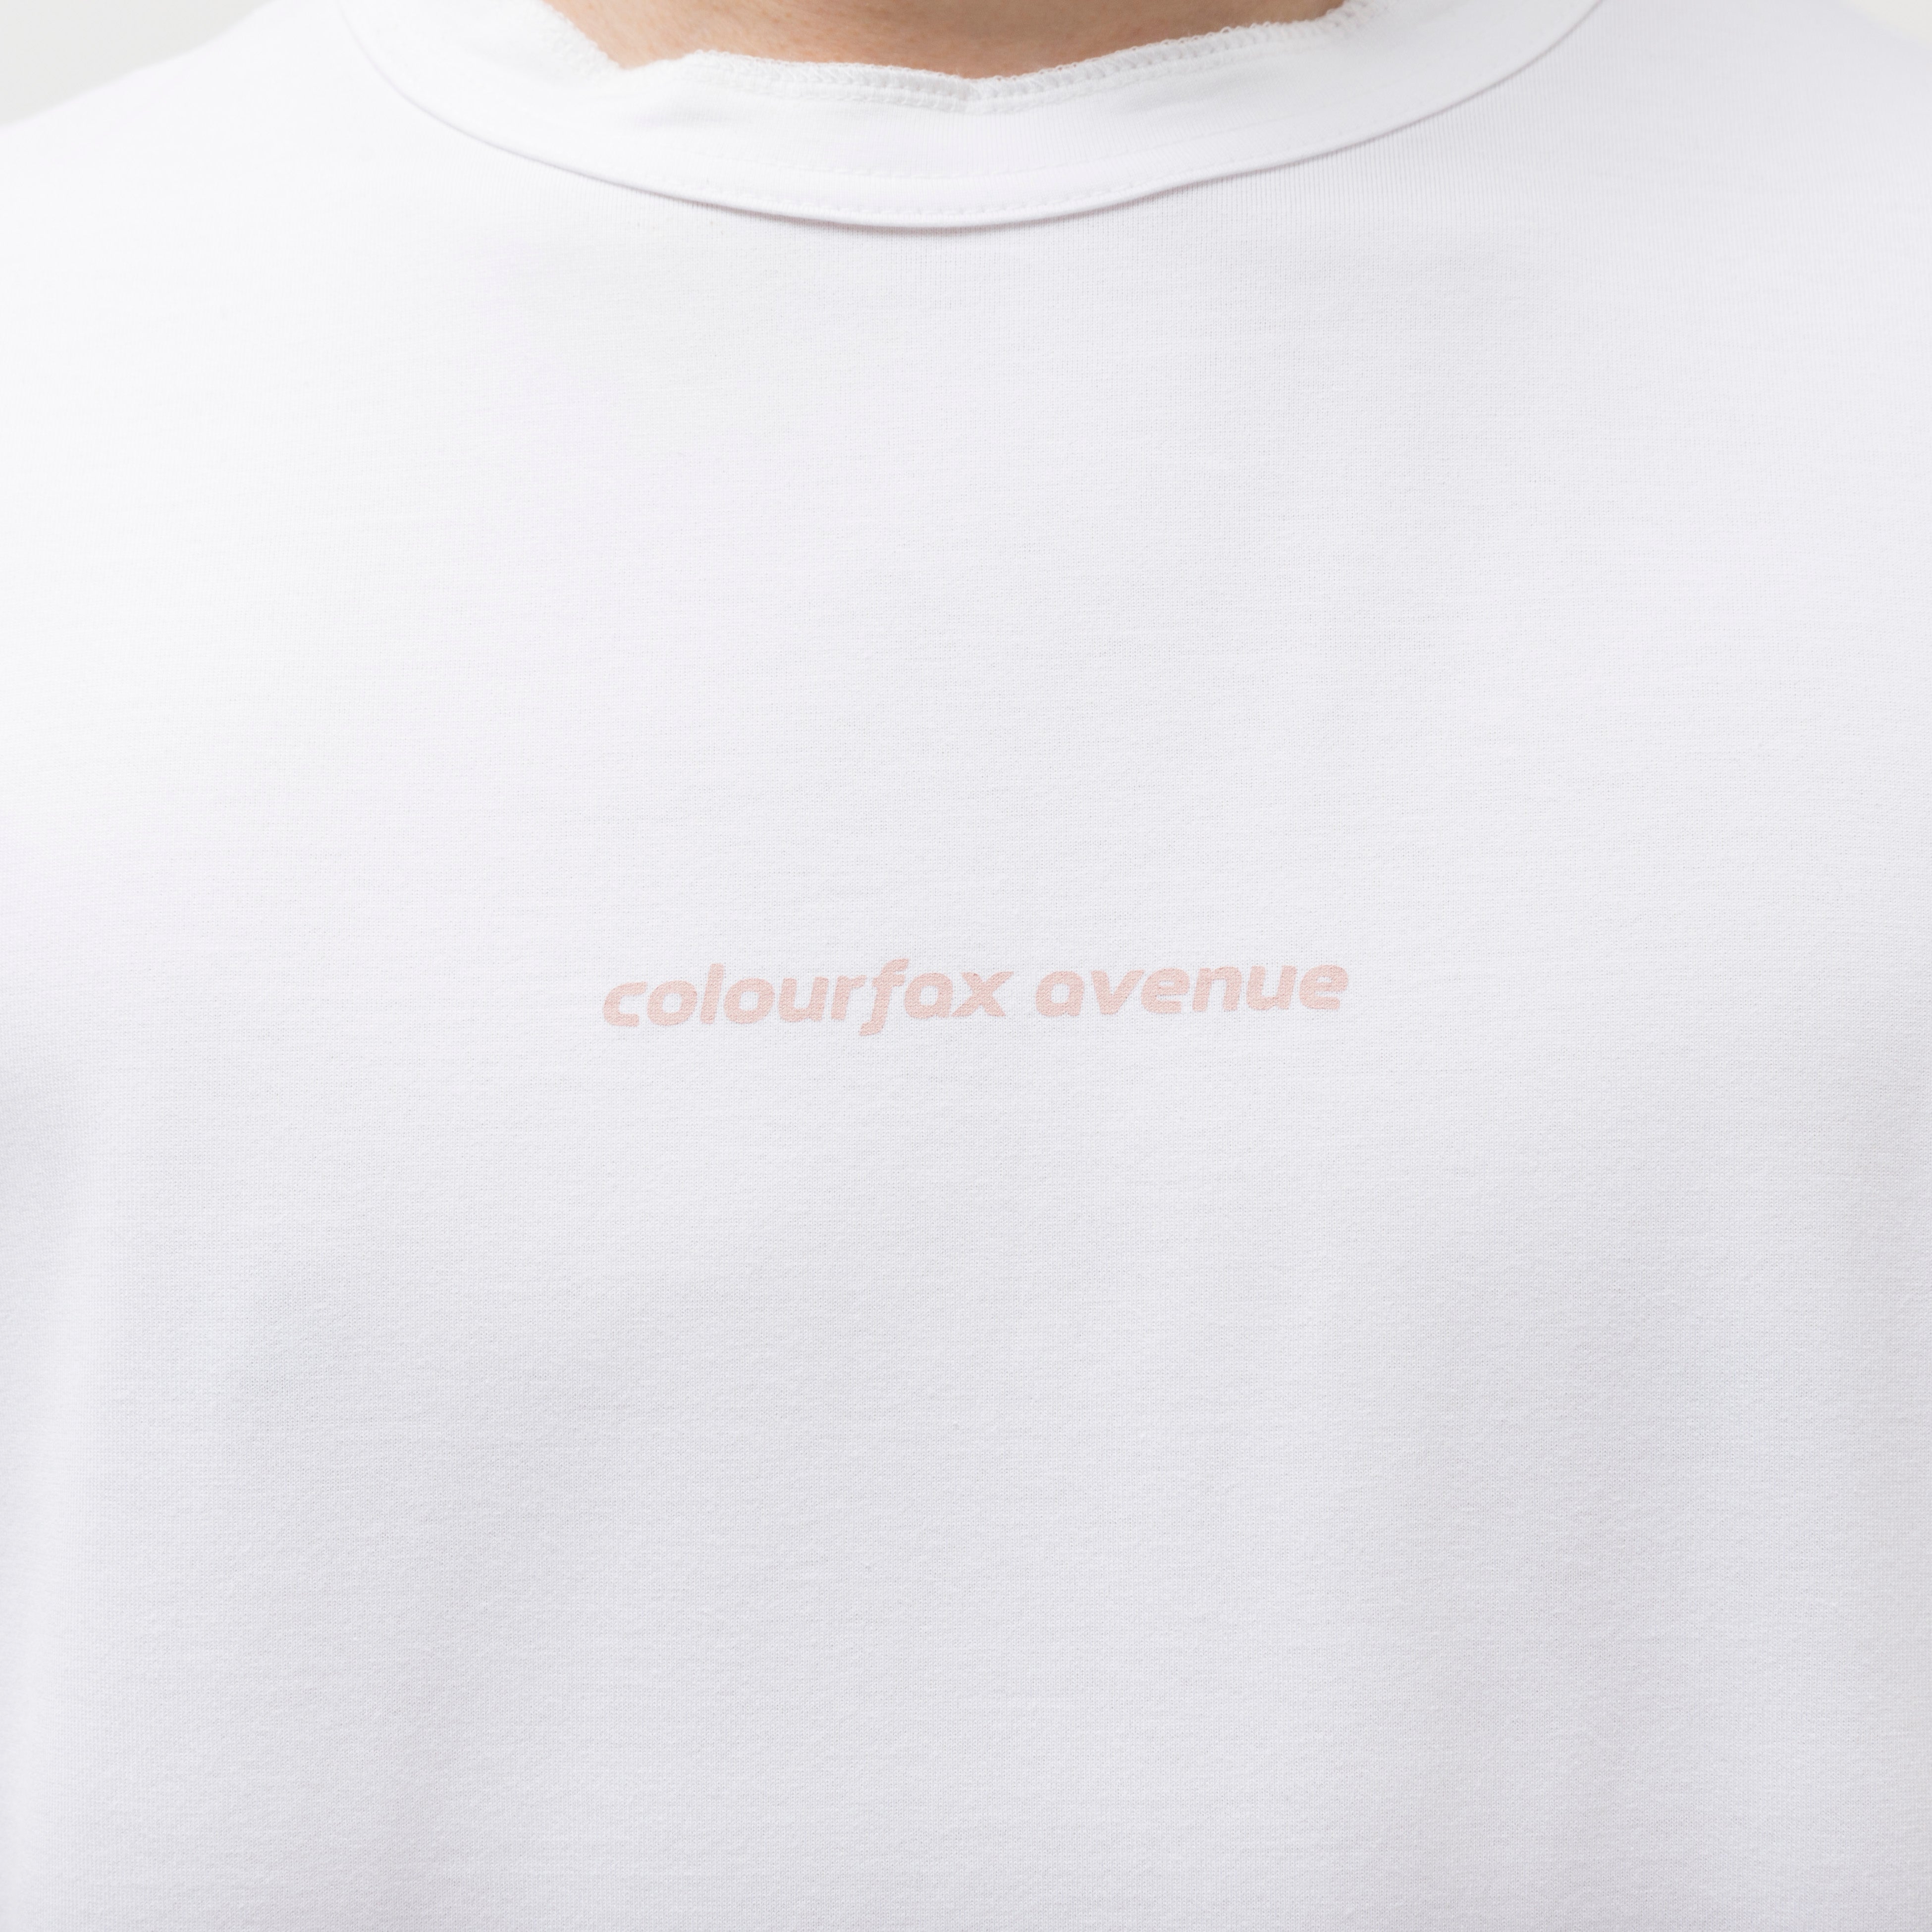 “colourfax avenue” Tshirt